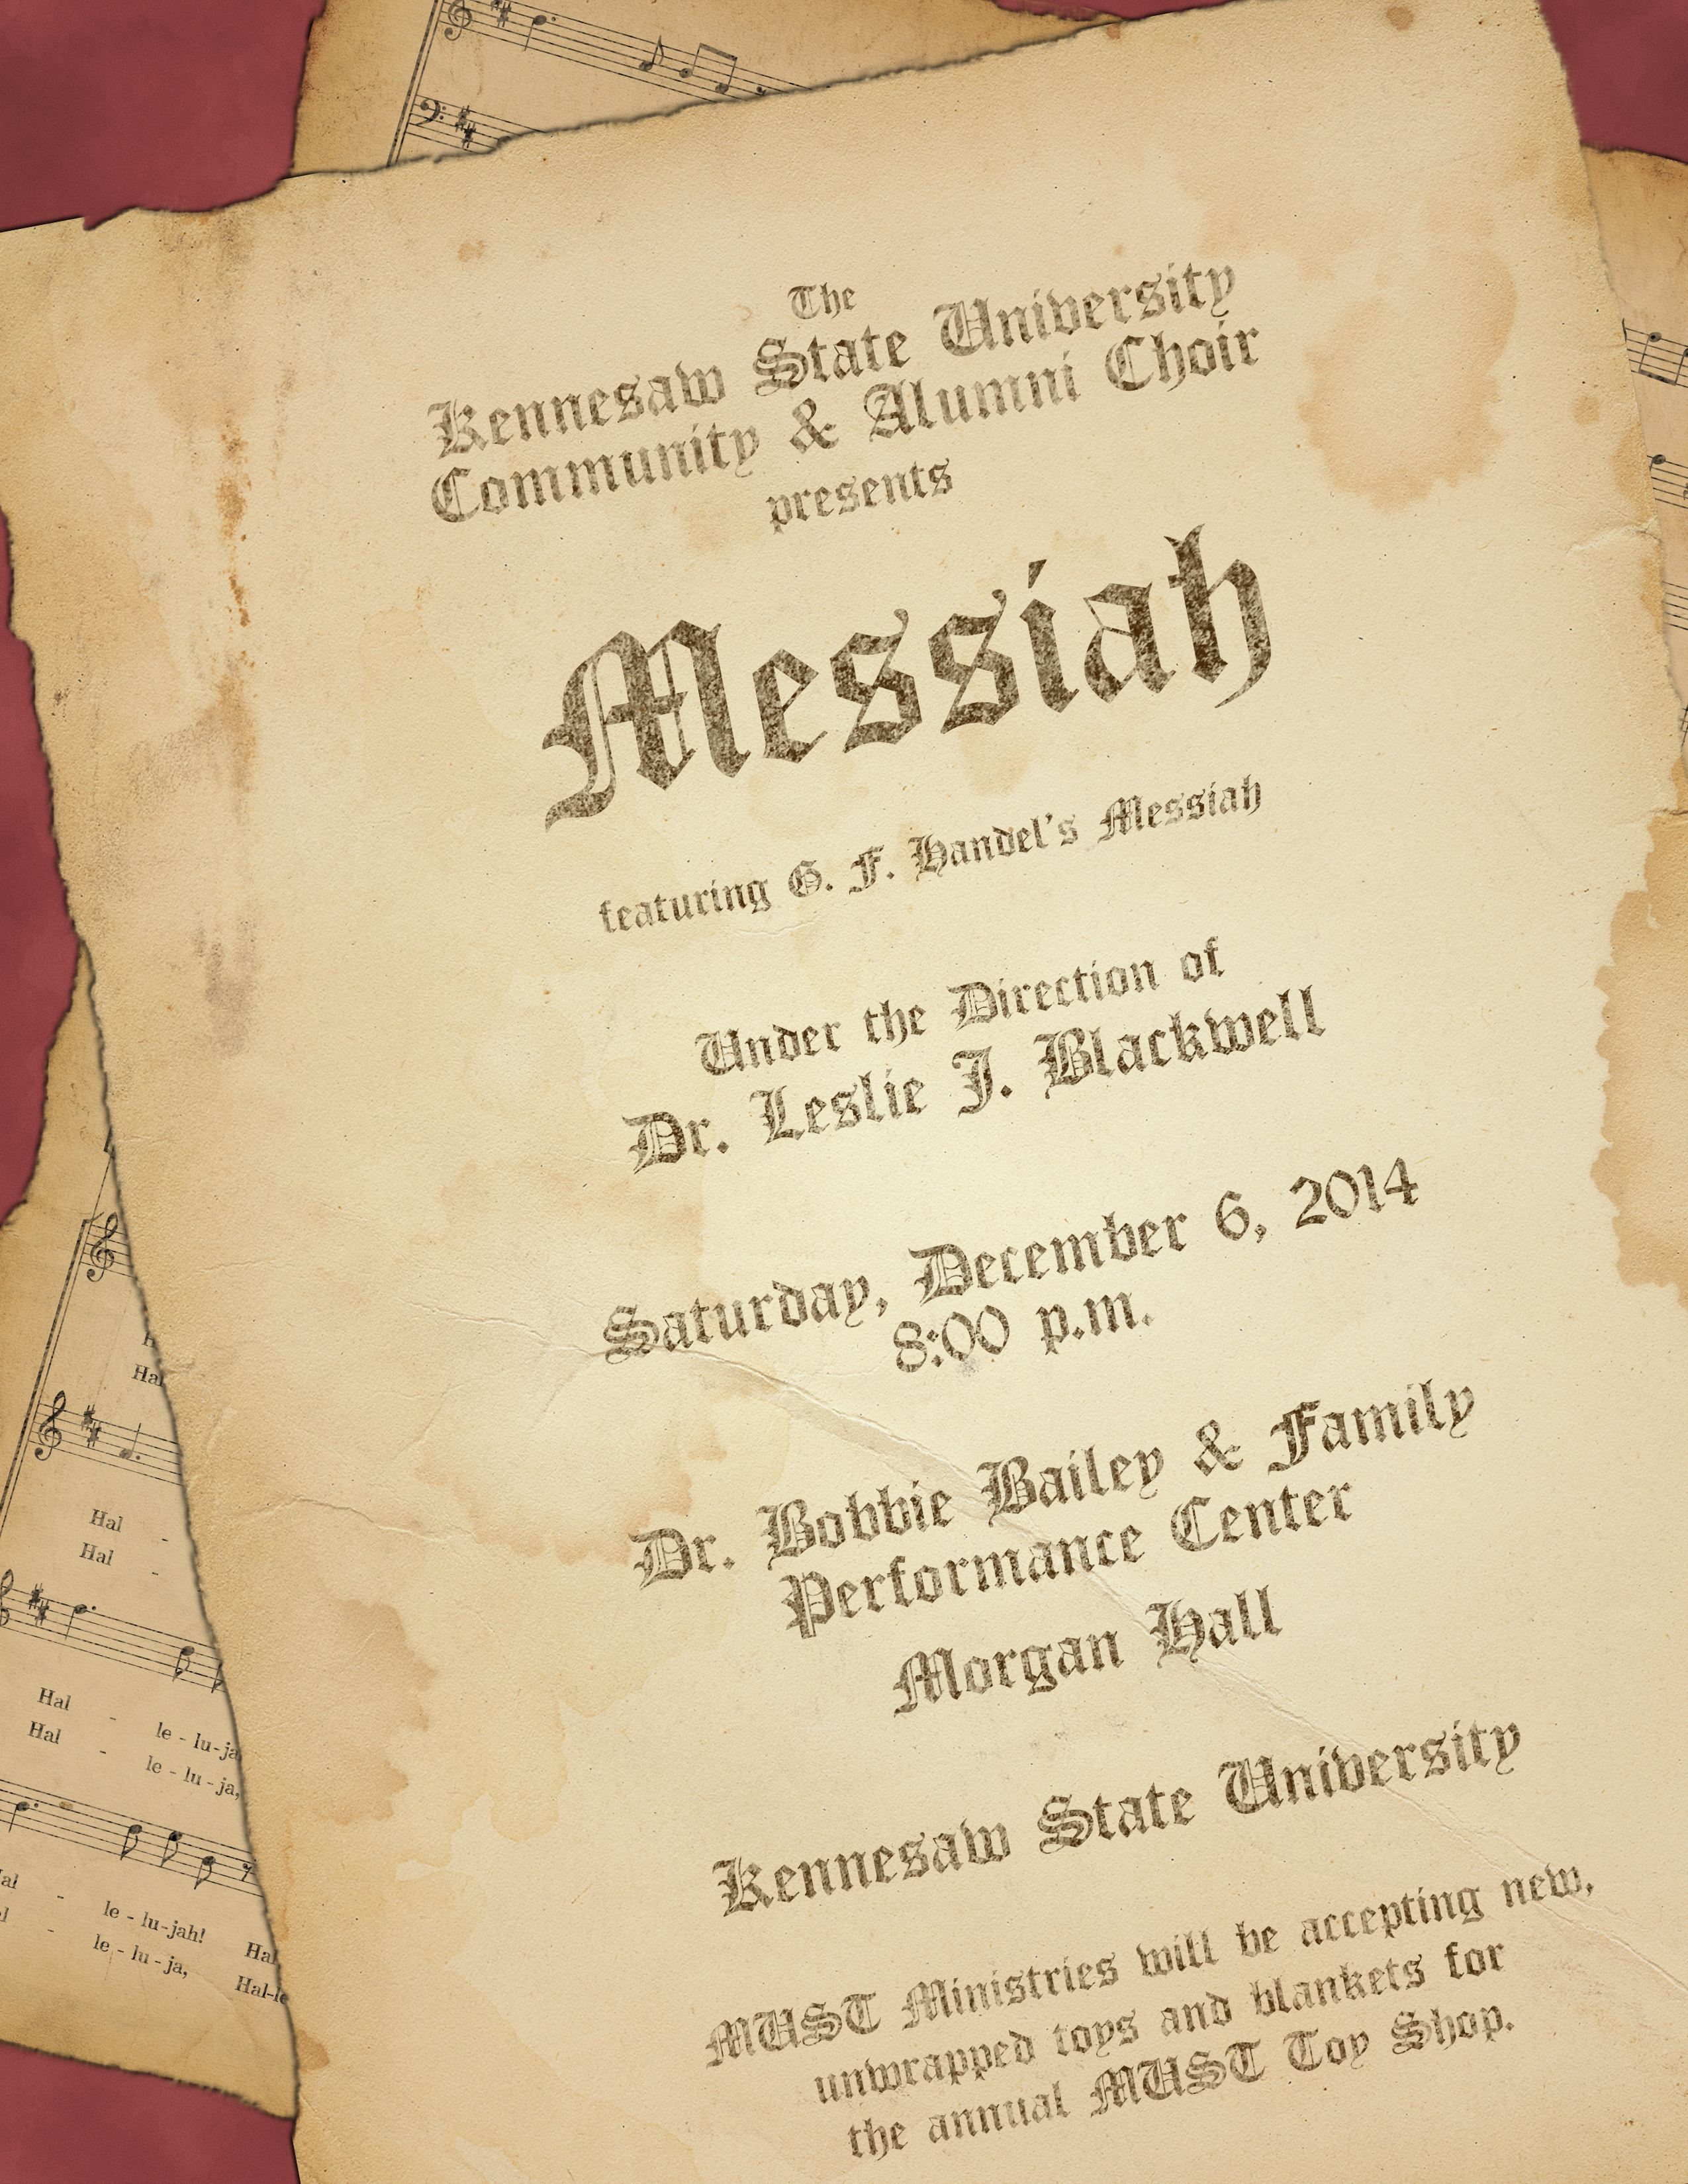 Fall 2014 Messiah Concert Program Cover